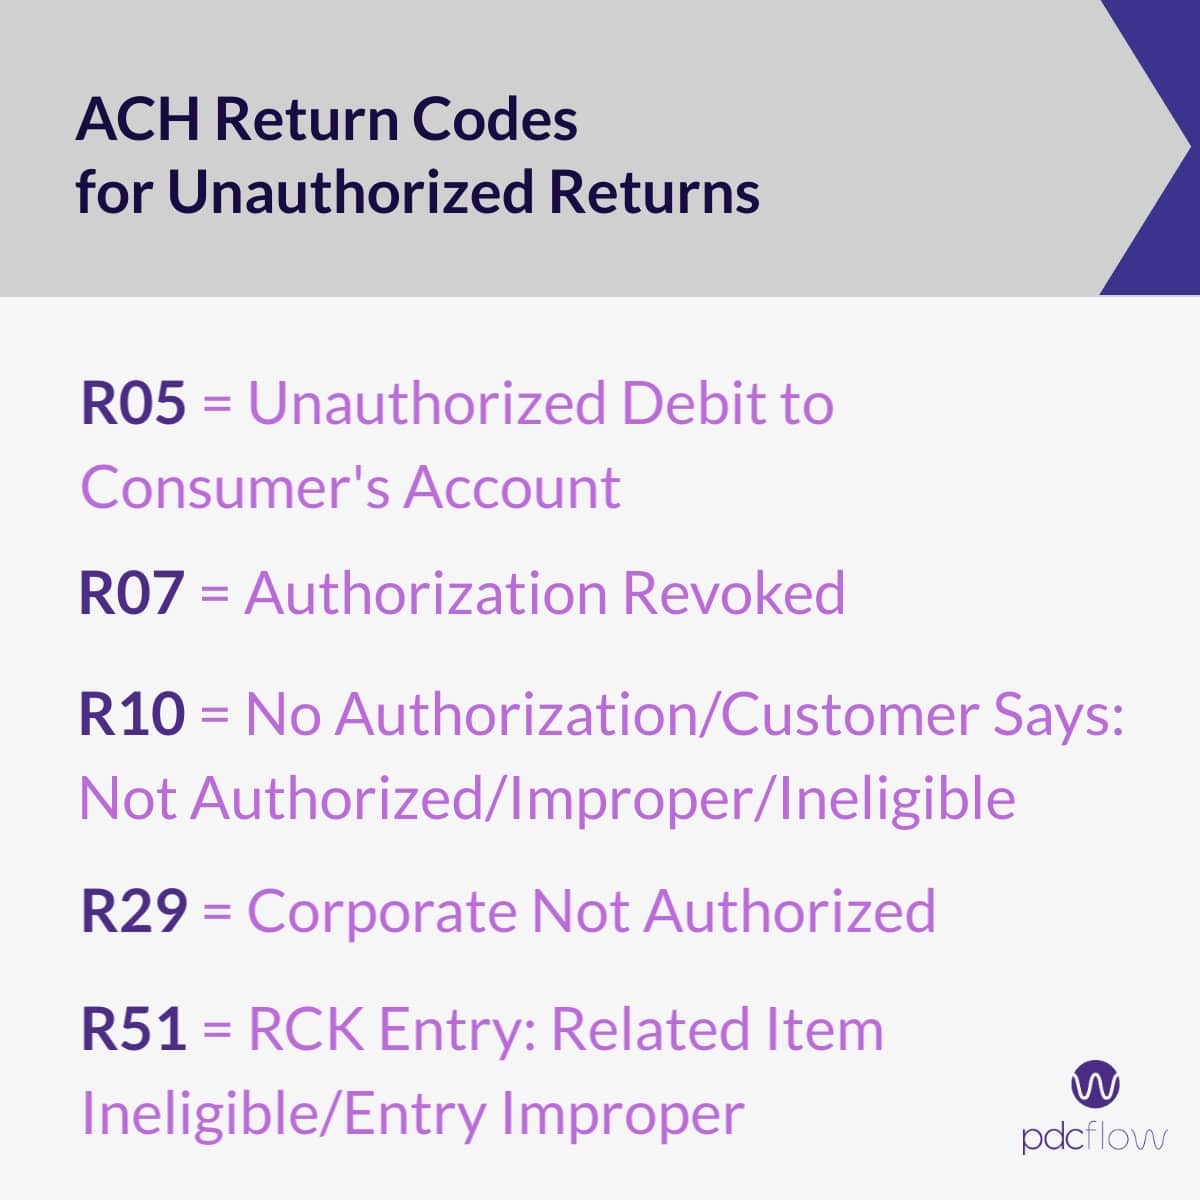 ACH Return Codes for Unauthorized Returns